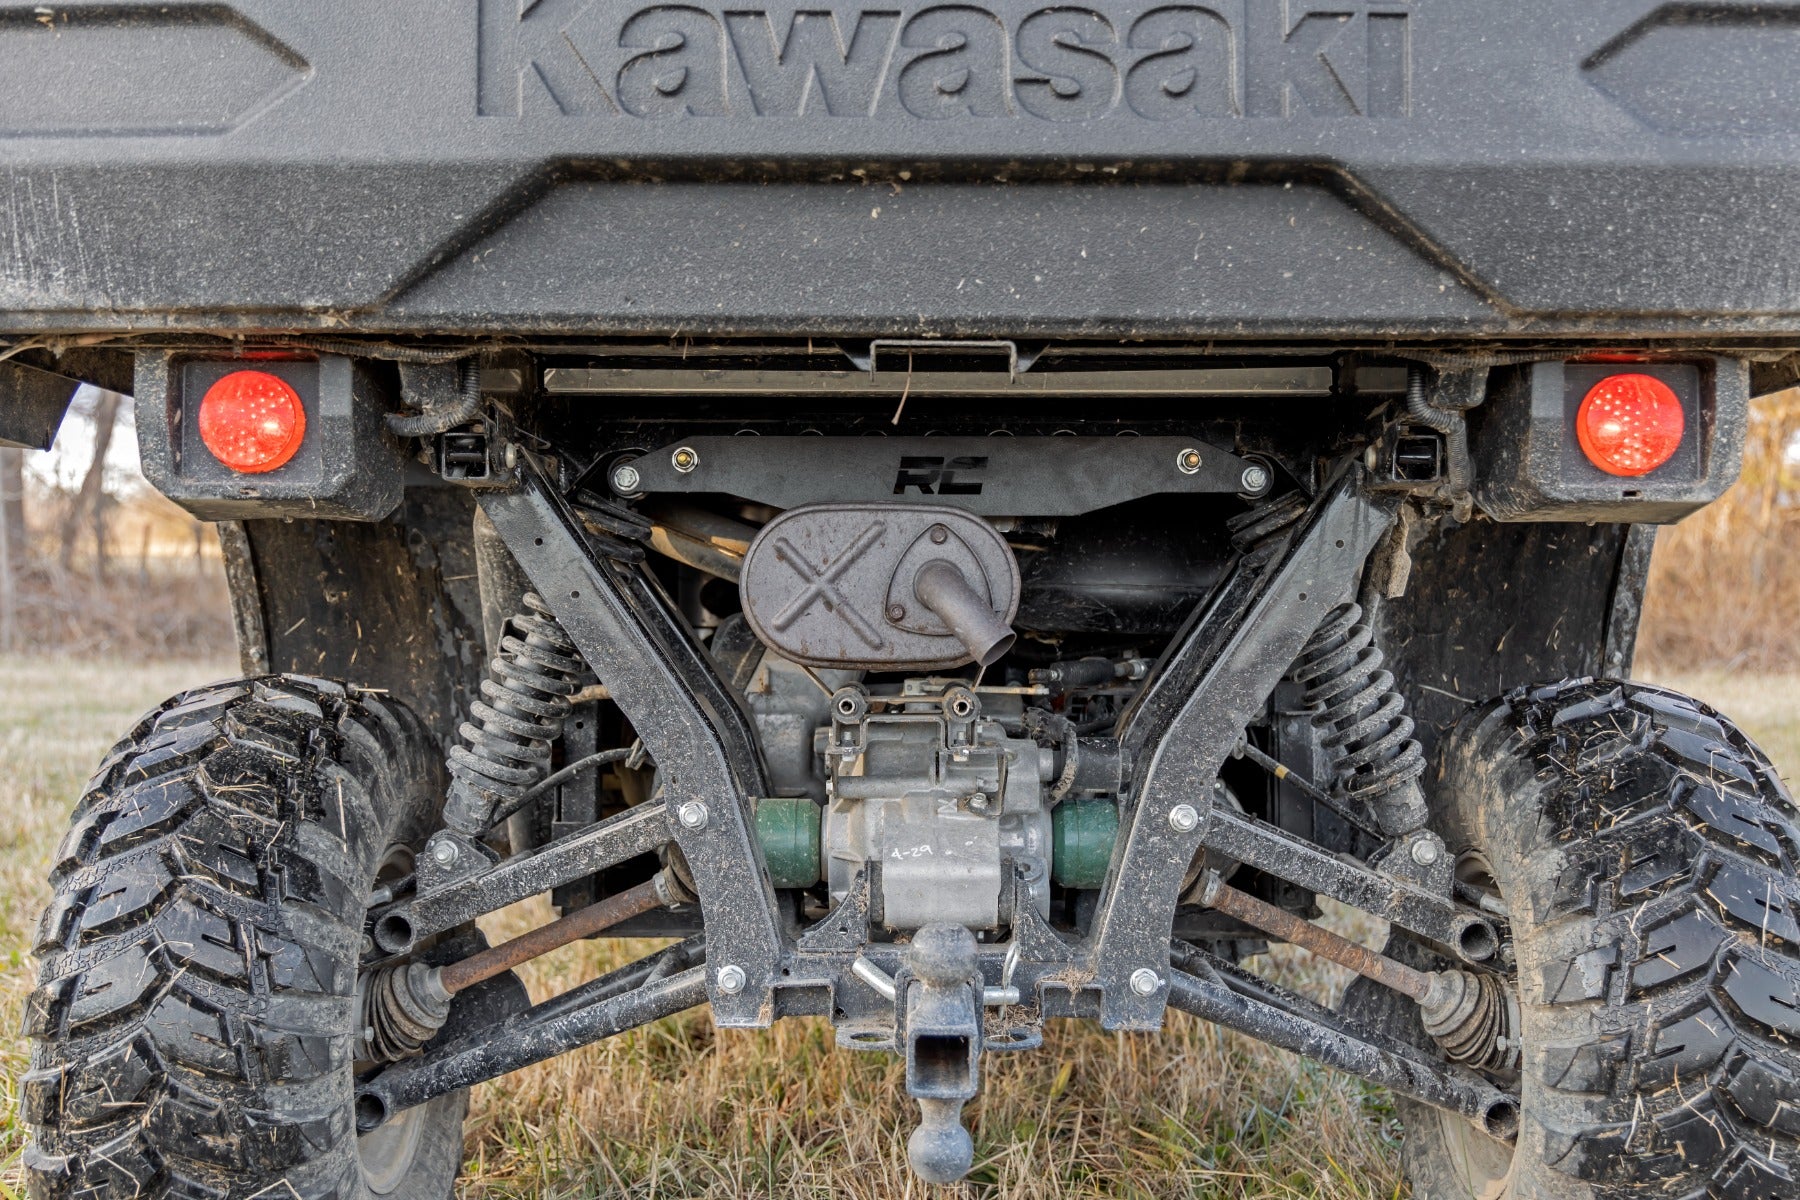 3 Inch Lift Kit | Kawasaki Mule